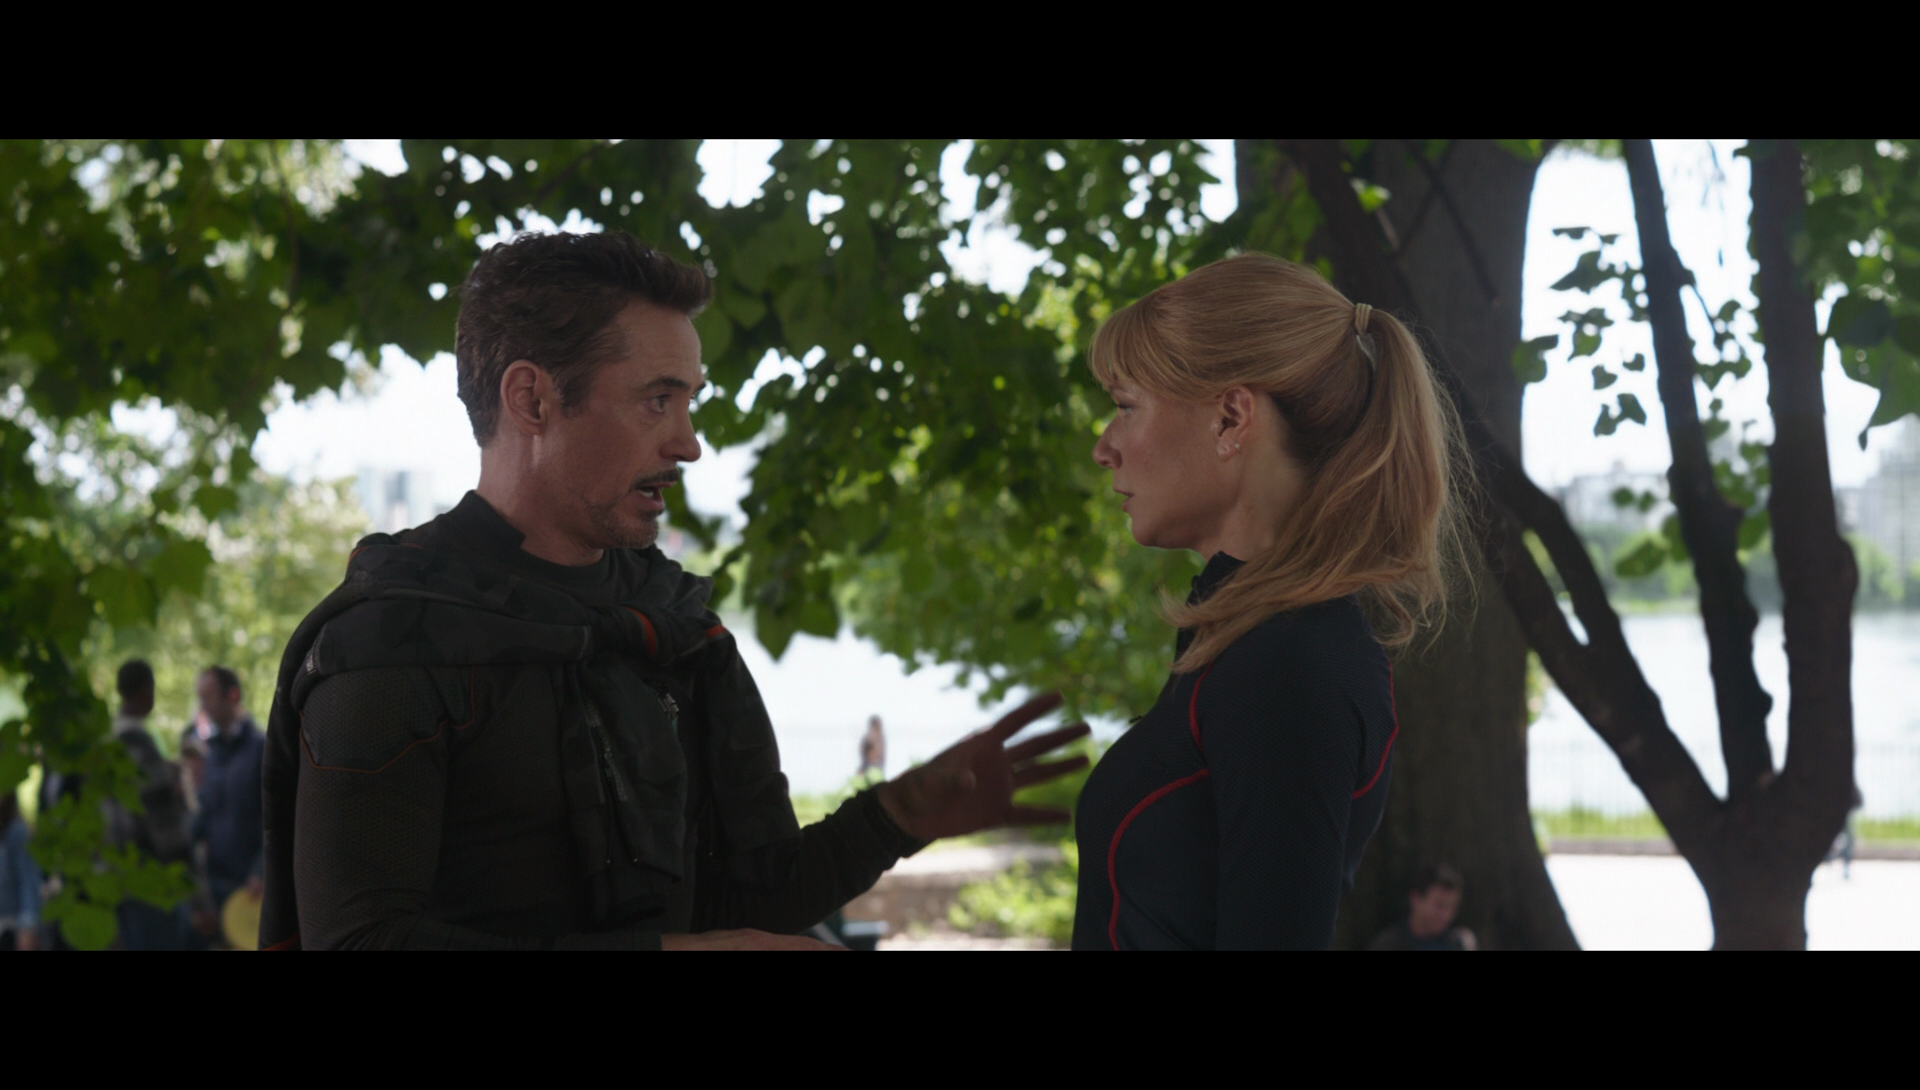 [复仇者联盟3].Avengers.Infinity.War.2018.3D.BRA.BluRay.1080p.AVC.DTS-HD.MA.7.1-Highvoltage    46.3G-11.png